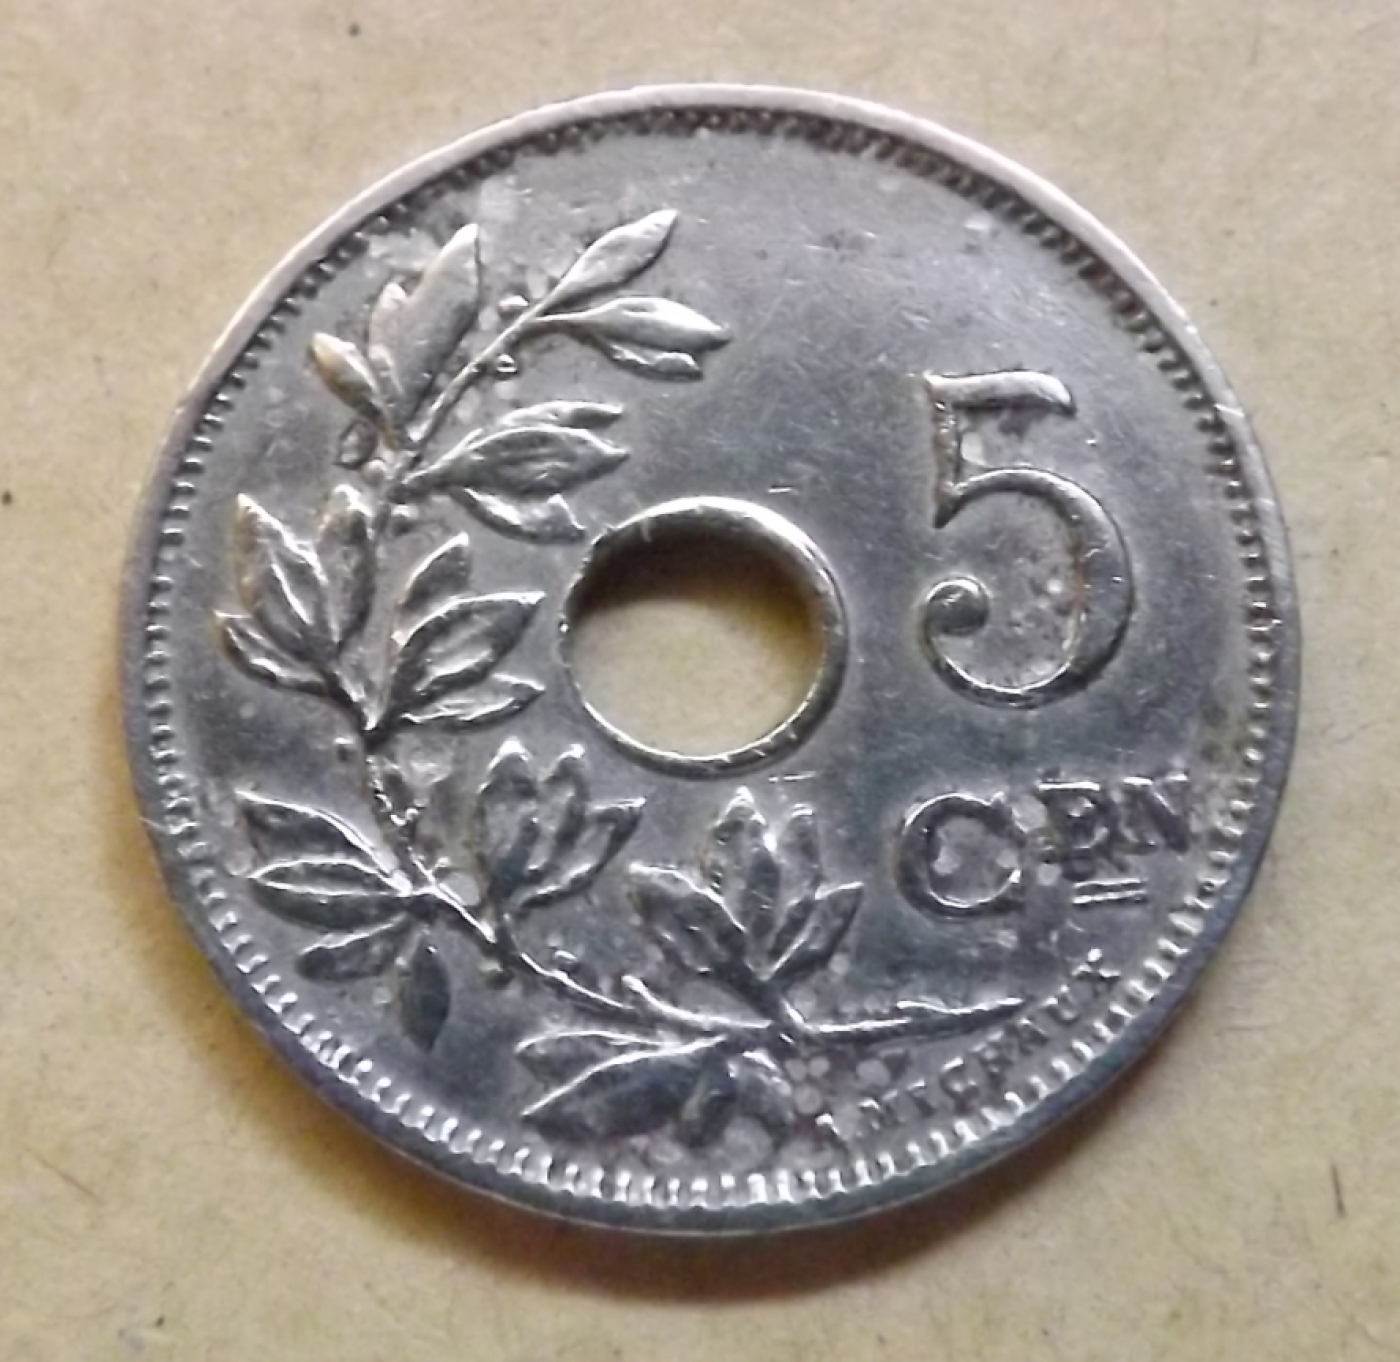 5 Centimes 1924 (Belgie), Albert I (1922-1934) - Belgium - Coin - 39142